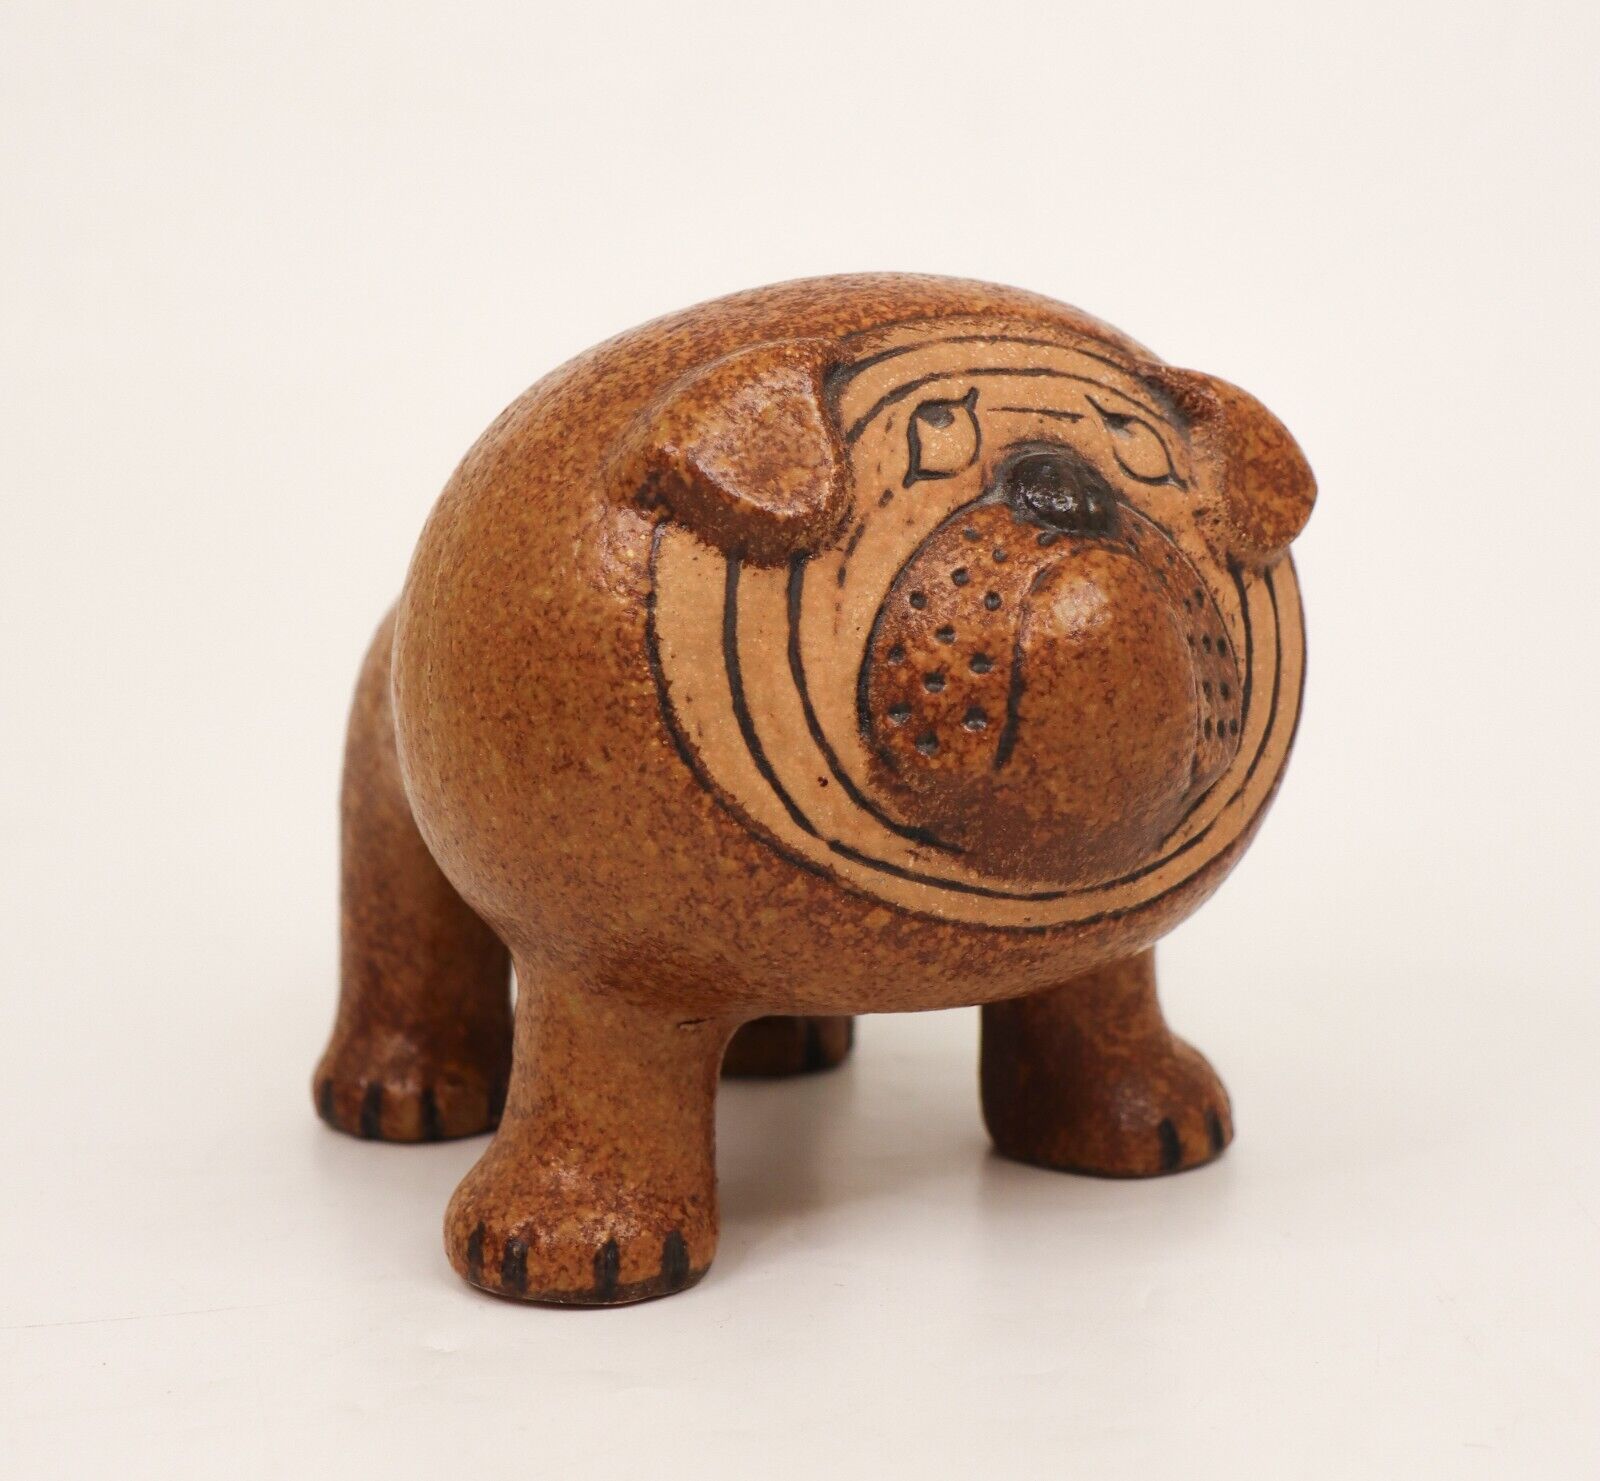 Lisa Larson - Bulldog Ceramic Sculpture - Gustavsbergs Studio Sweden